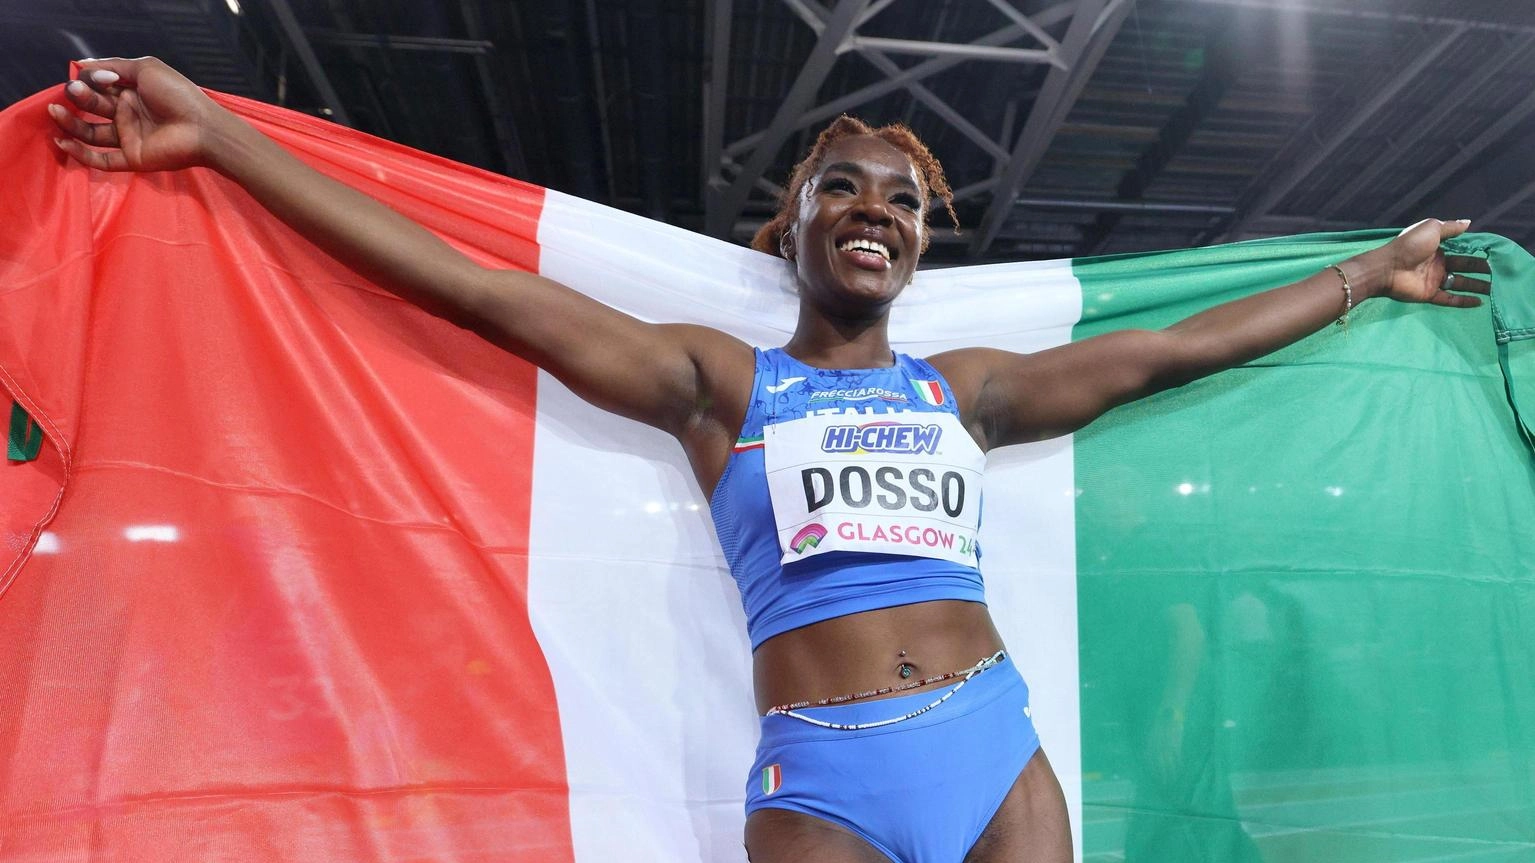 Atletica: Sprint Festival a Roma, Dosso vince i 200 m donne